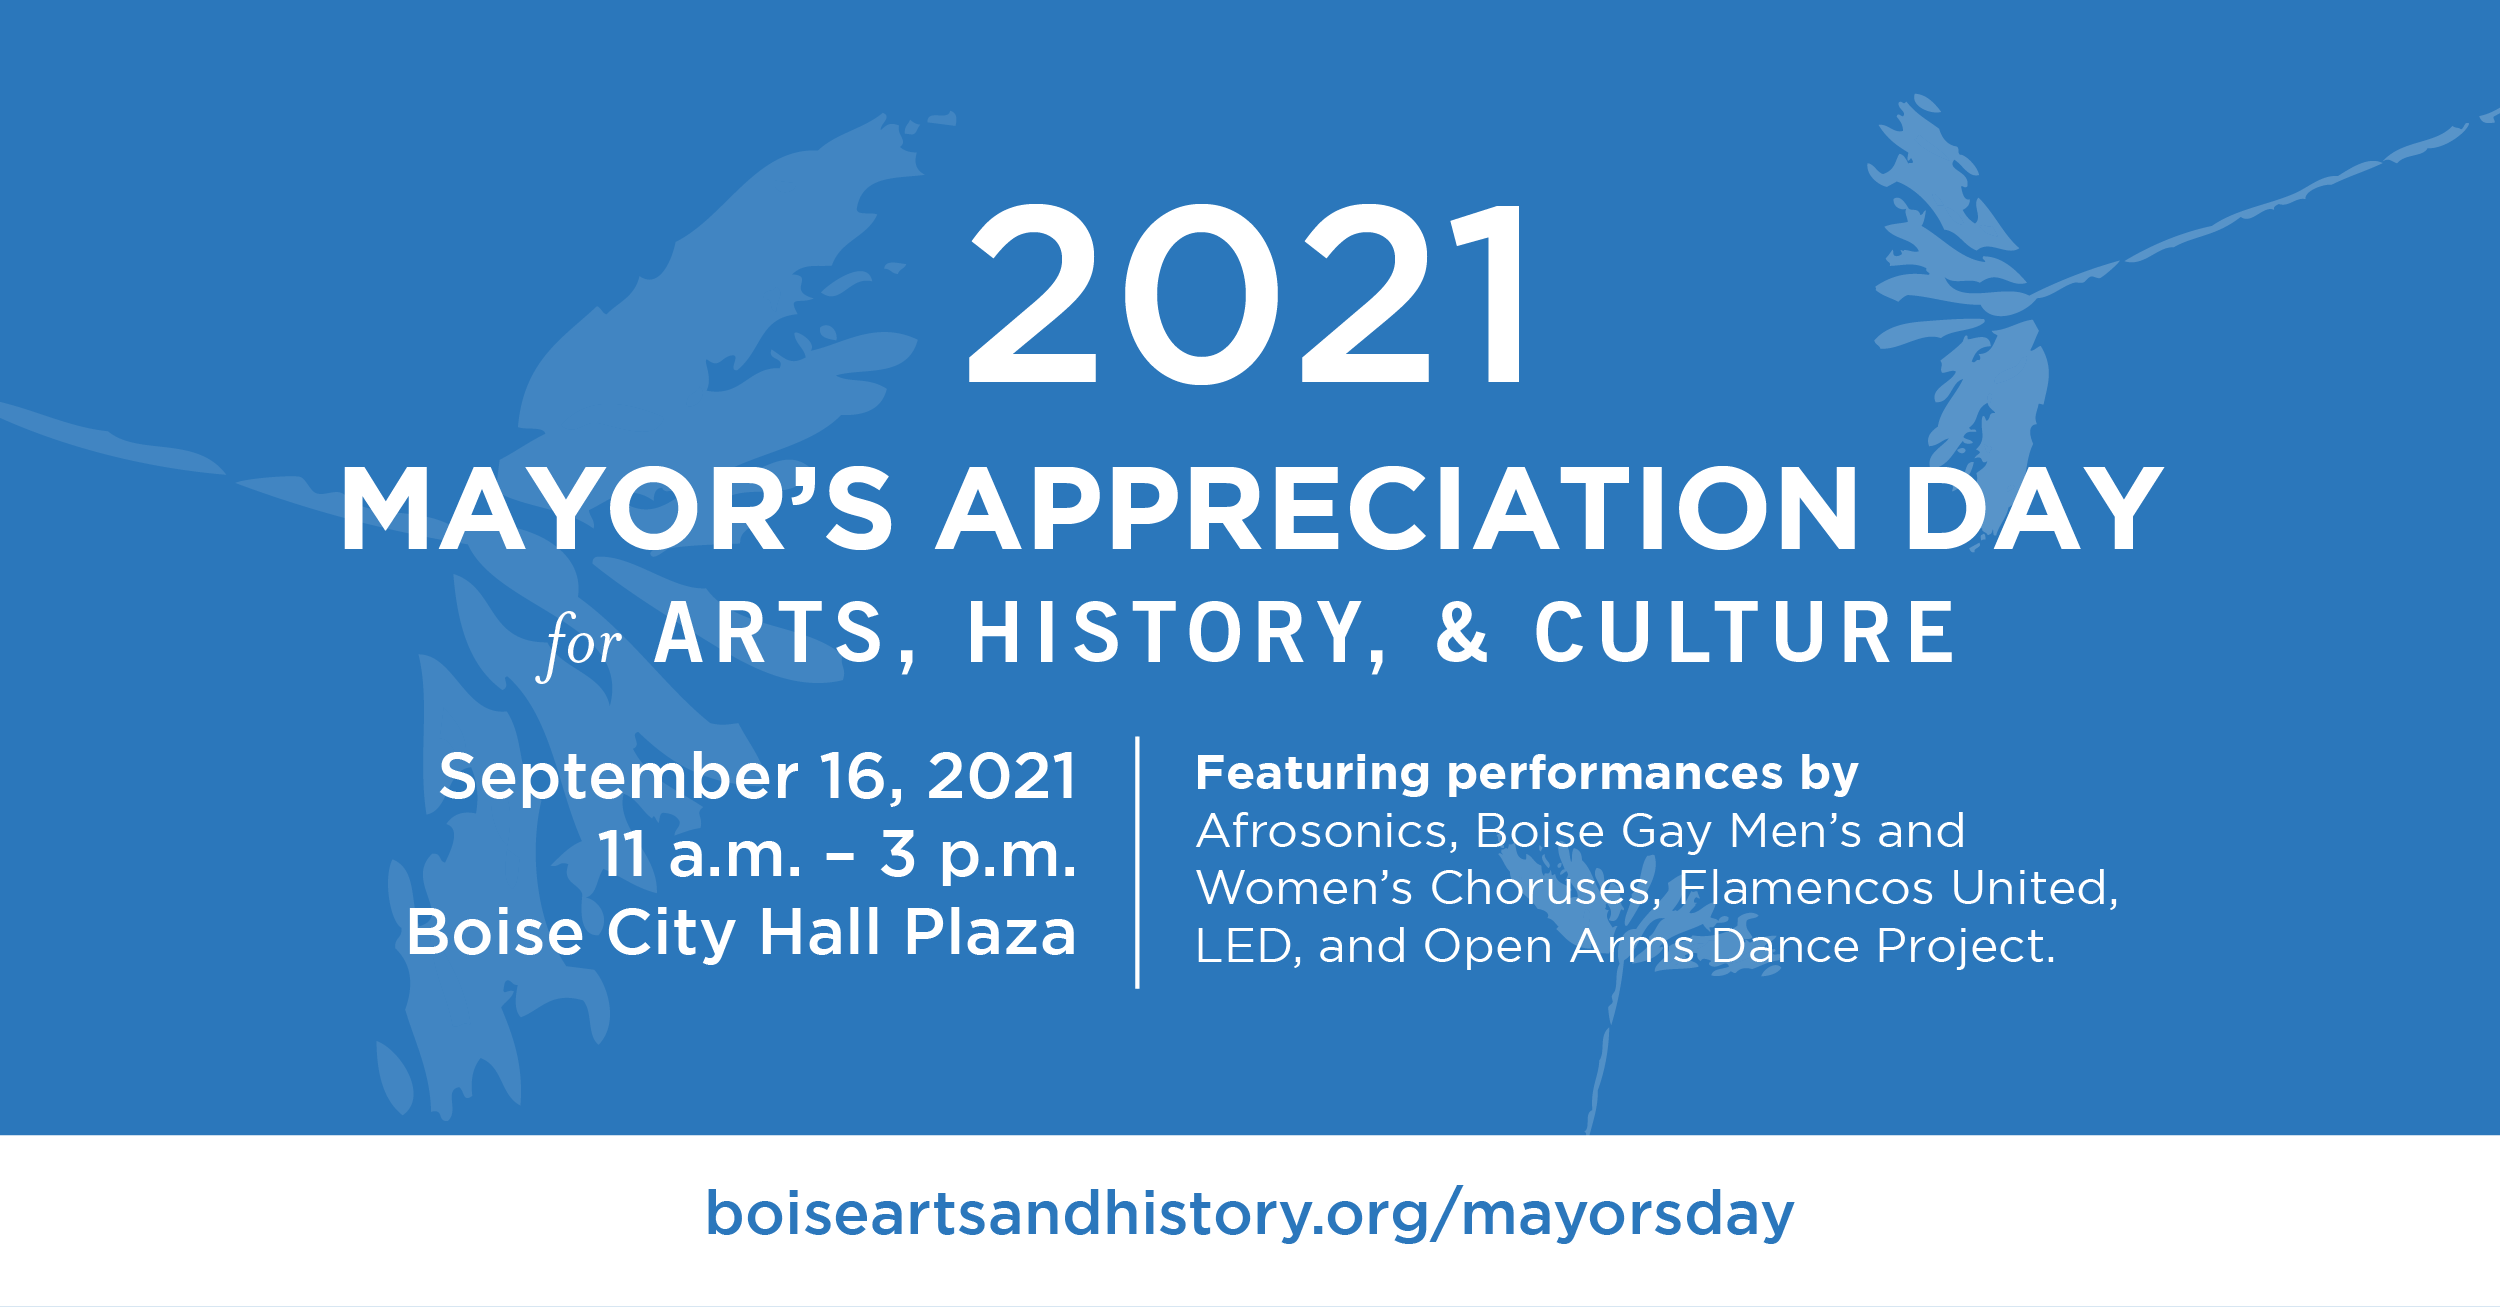 Mayor's Appreciation Day for Arts, History, & Culture